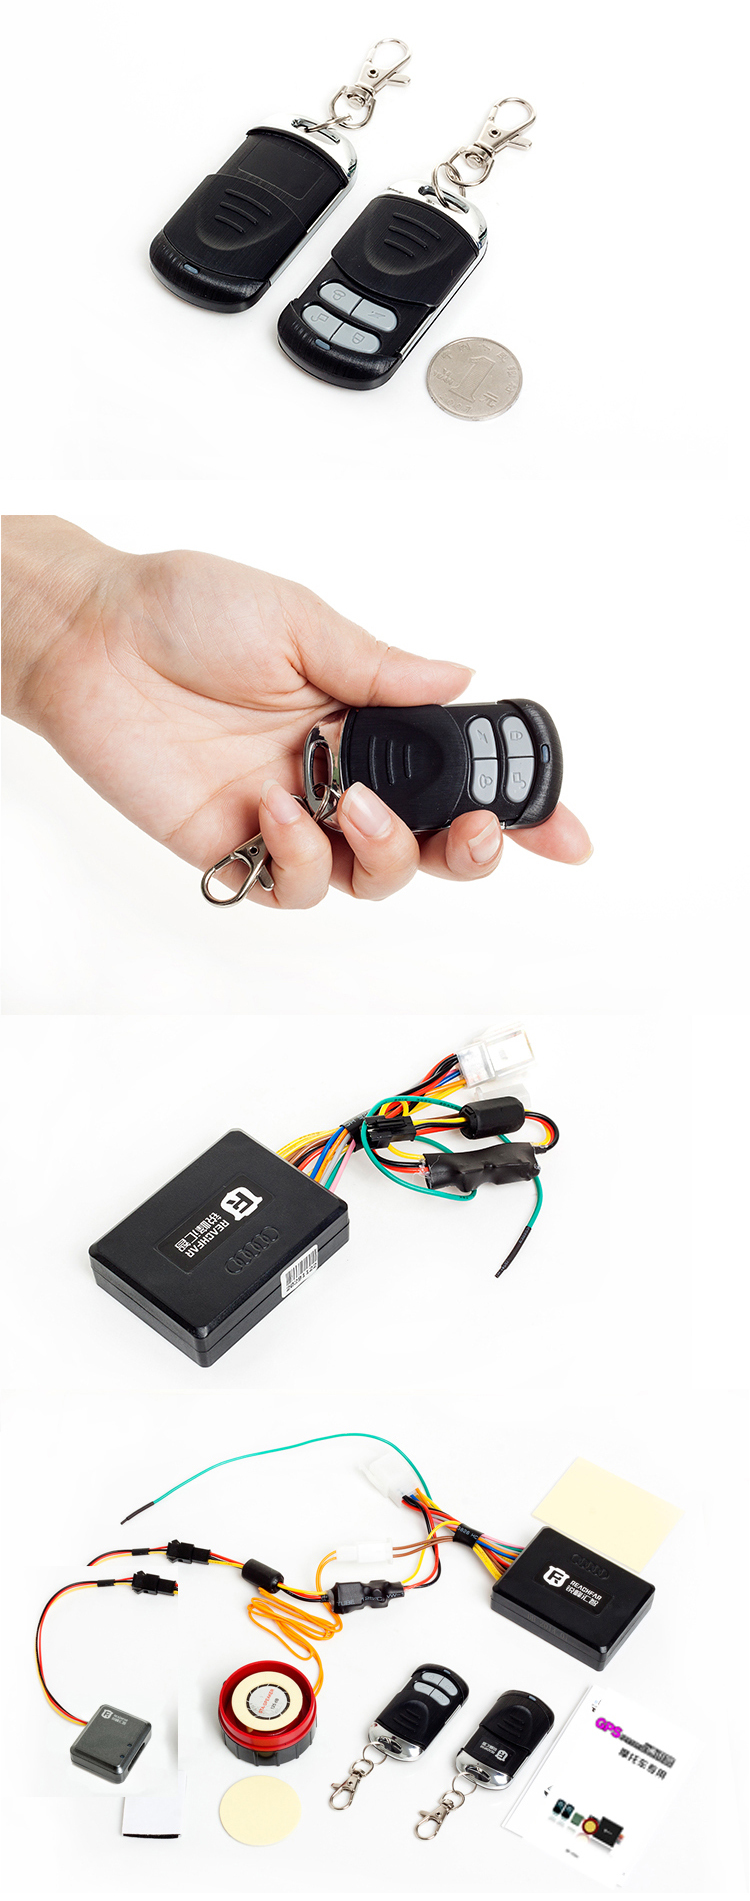 Rf-v10+ remote control motorcycle anti-theft gps tracker alarm/disalarm